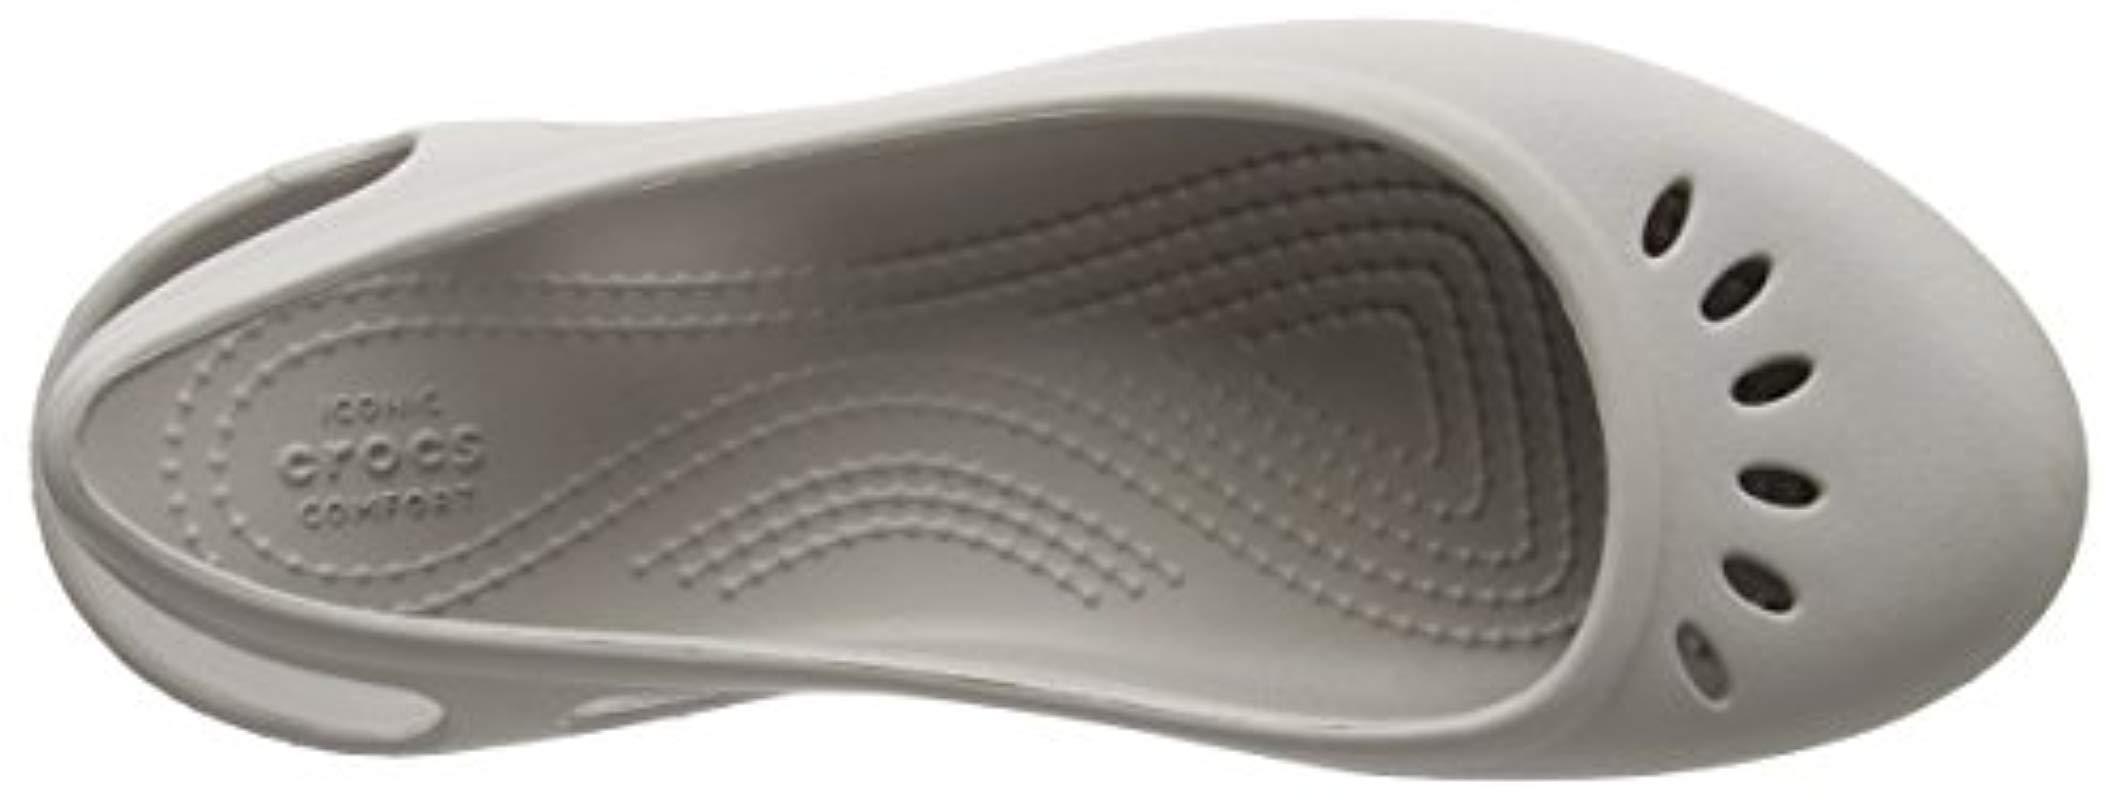 Crocs™ Kadee Slingback Closed-toe Sandals in Gray | Lyst